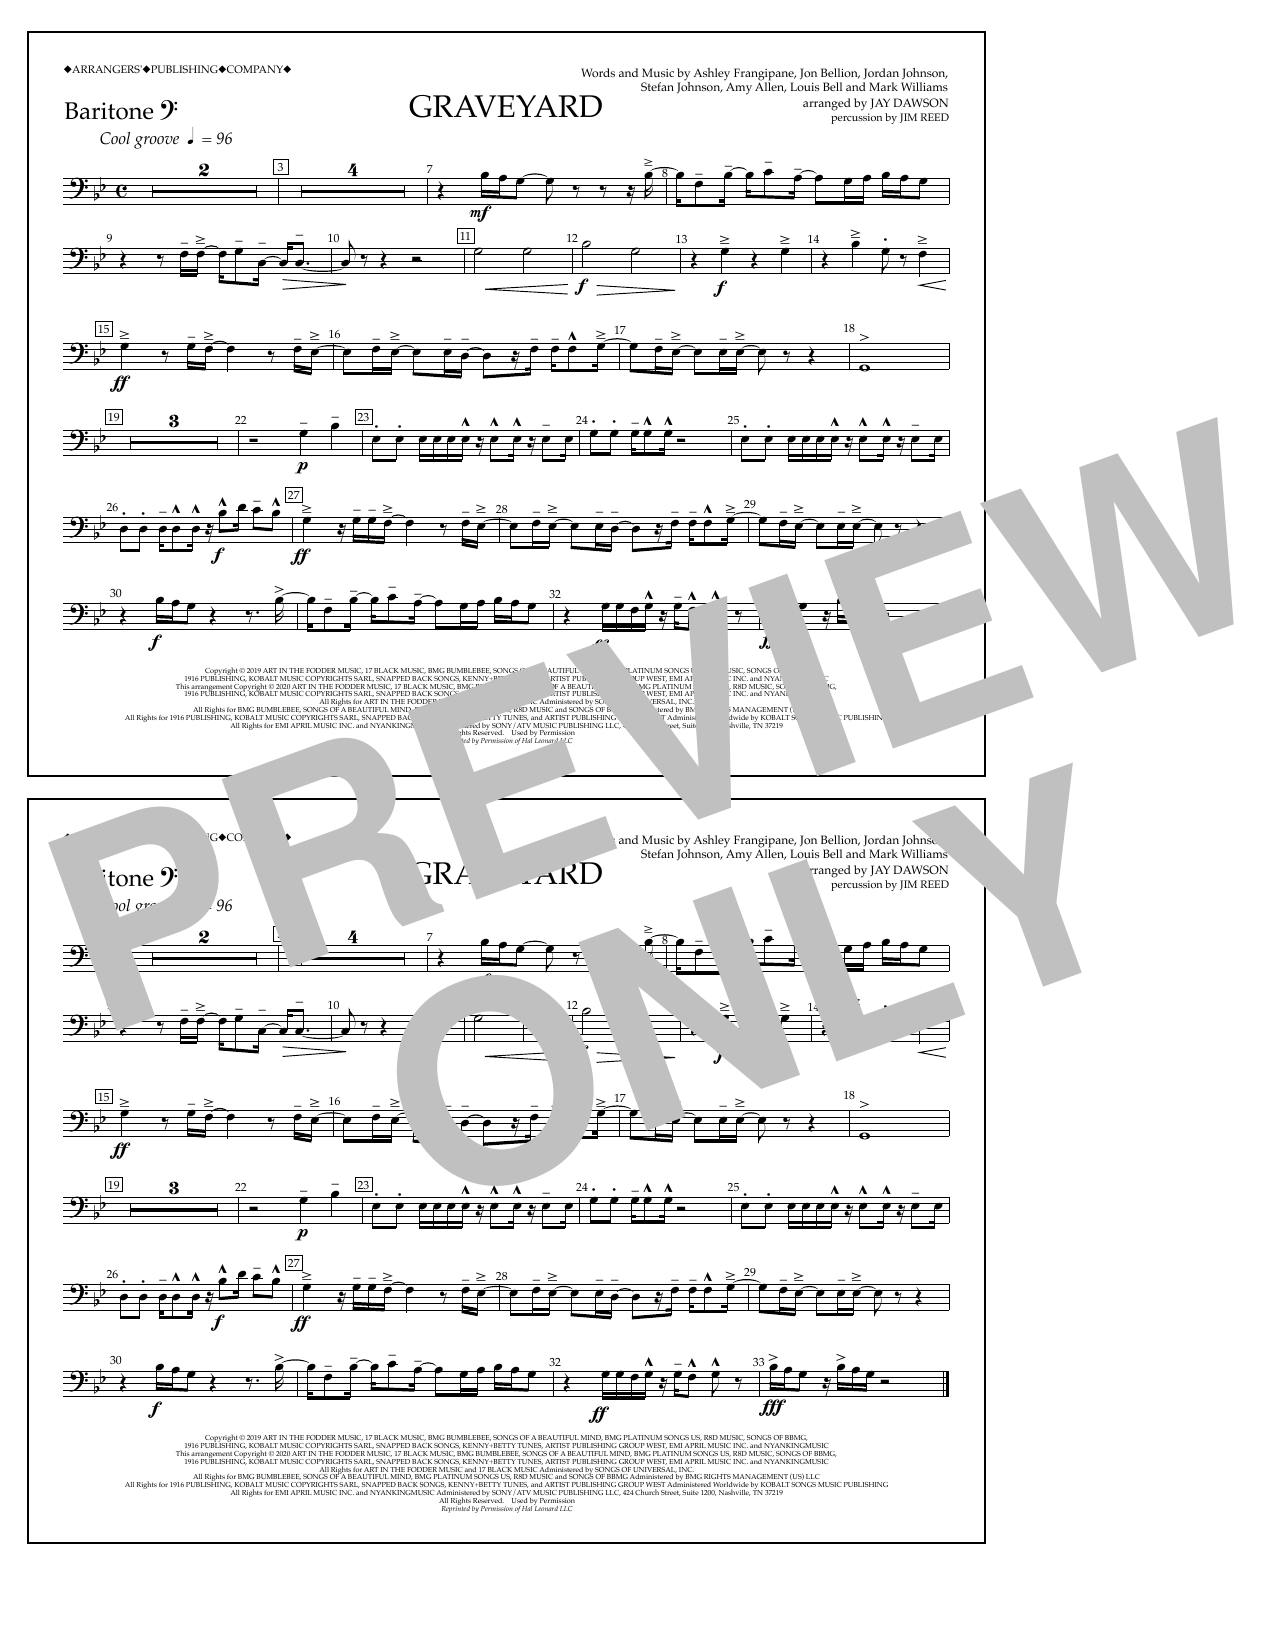 Halsey Graveyard (arr. Jay Dawson) - Baritone B.C. Sheet Music Notes & Chords for Marching Band - Download or Print PDF